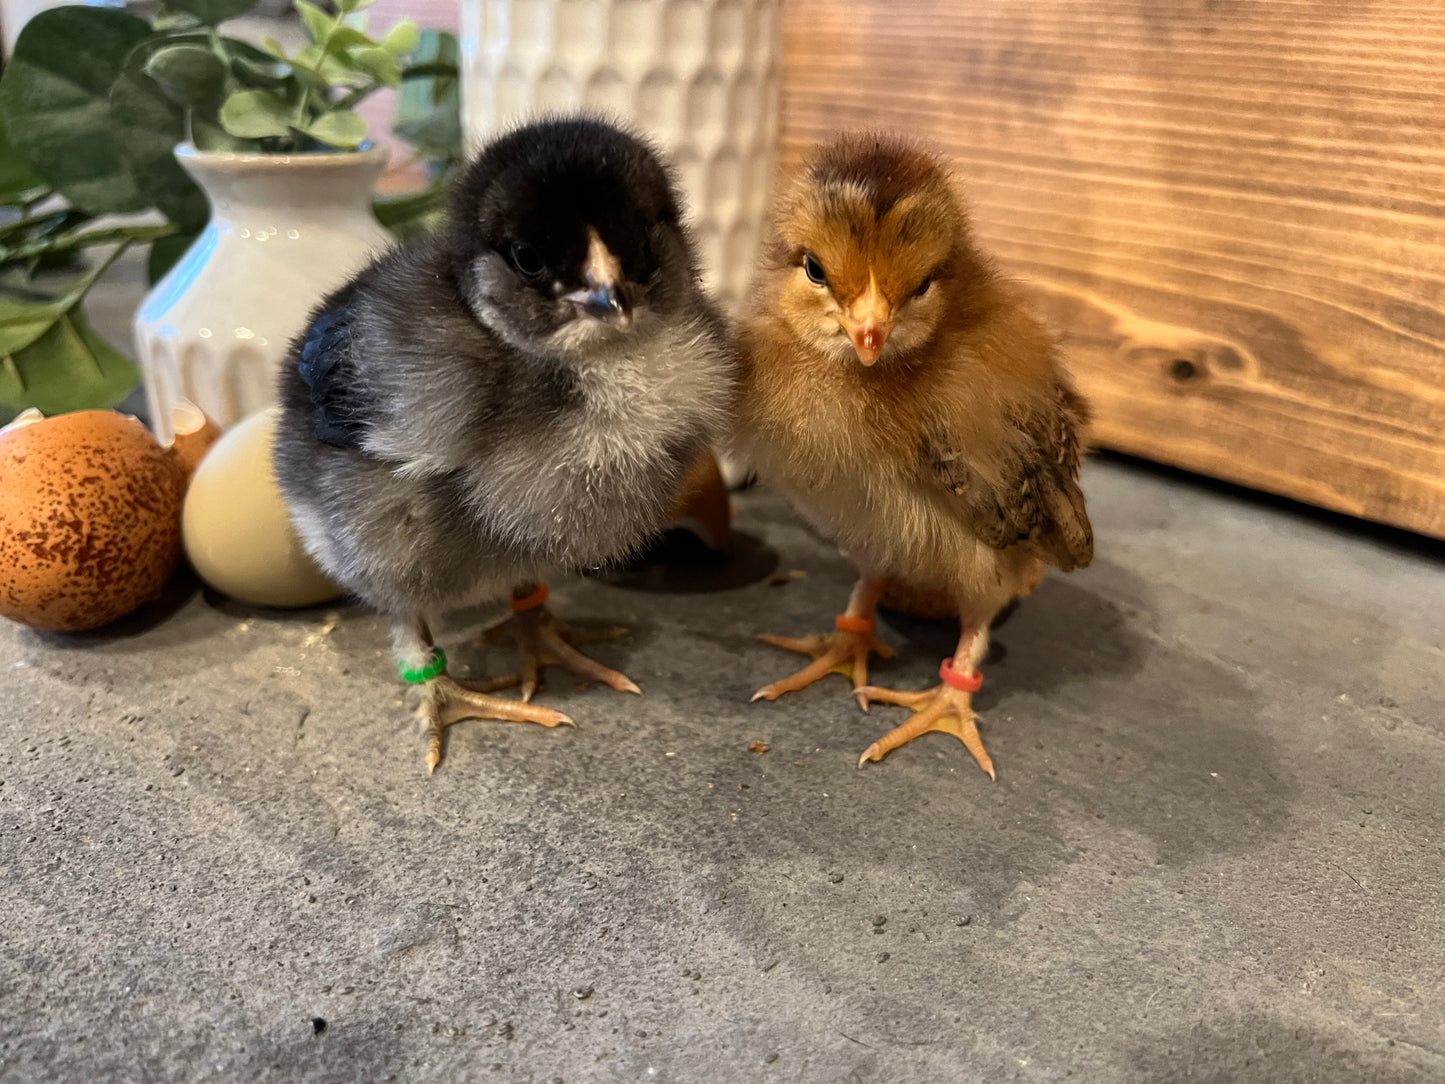 Multigenerational Olive Chicks - Minimum of 3 chicks